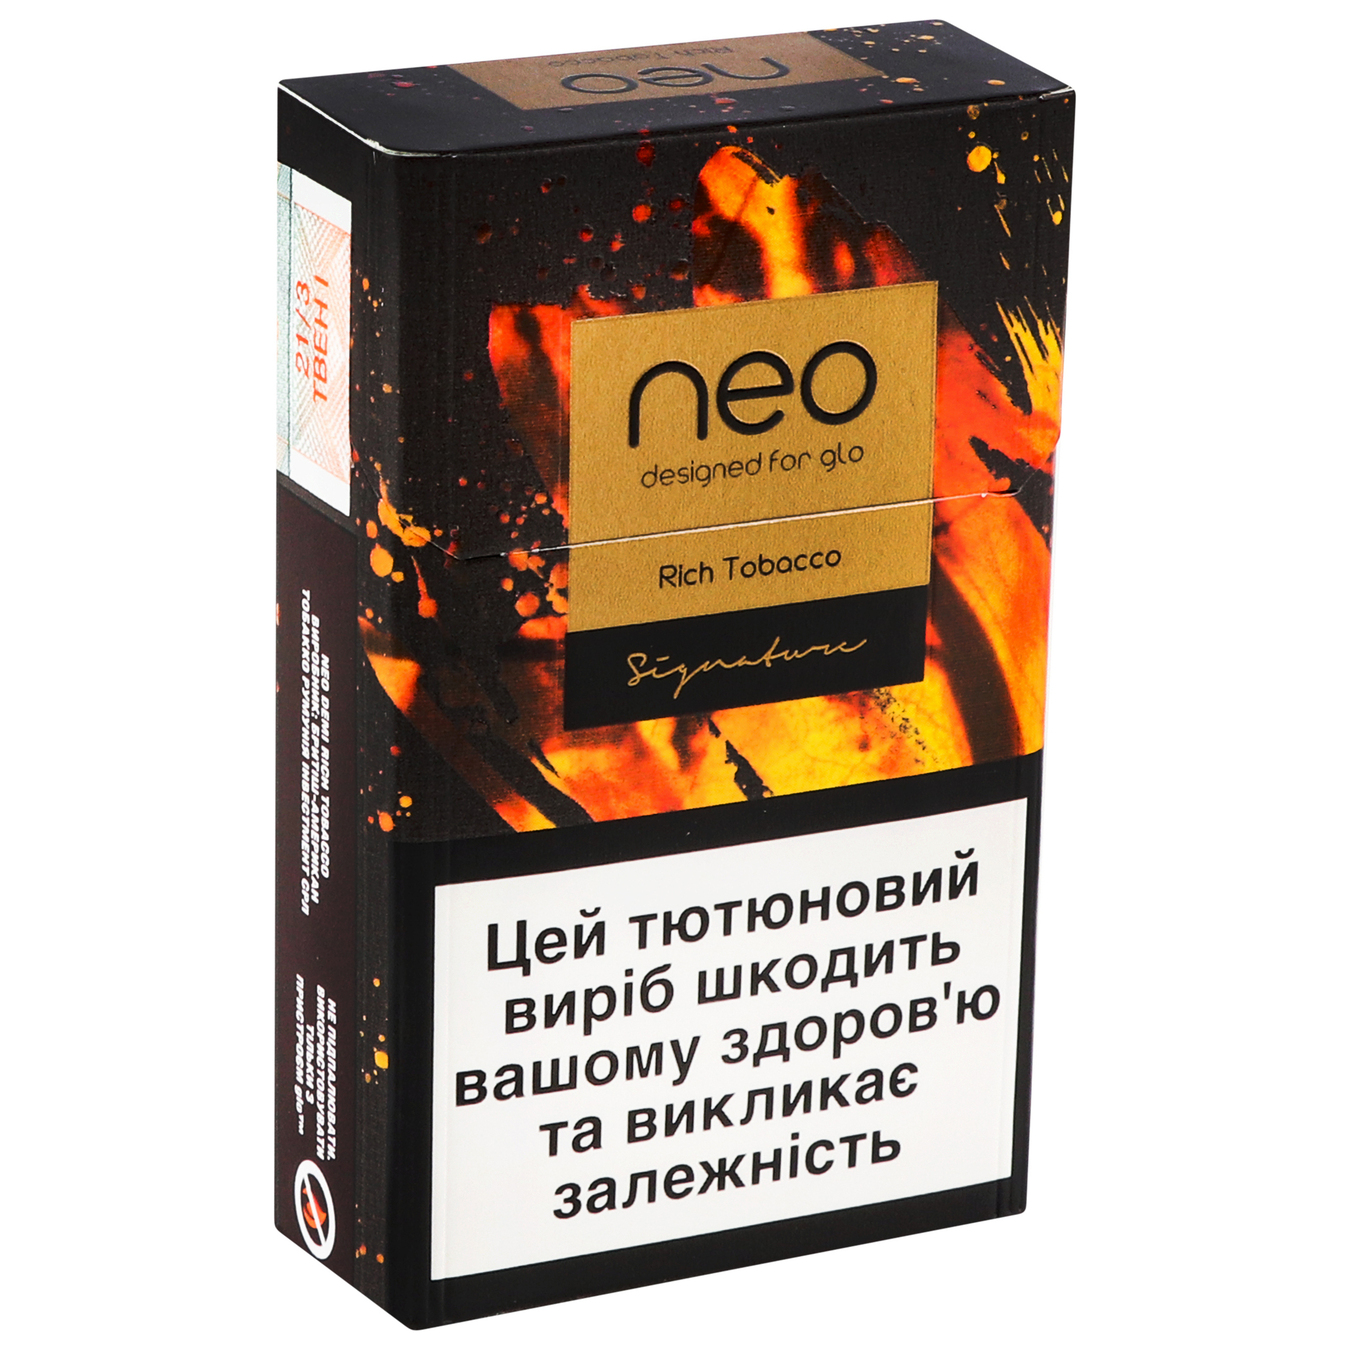 Стики Neo Demi Rich Tobacco табакосодержащие 20шт (цена указана без акциза) 4